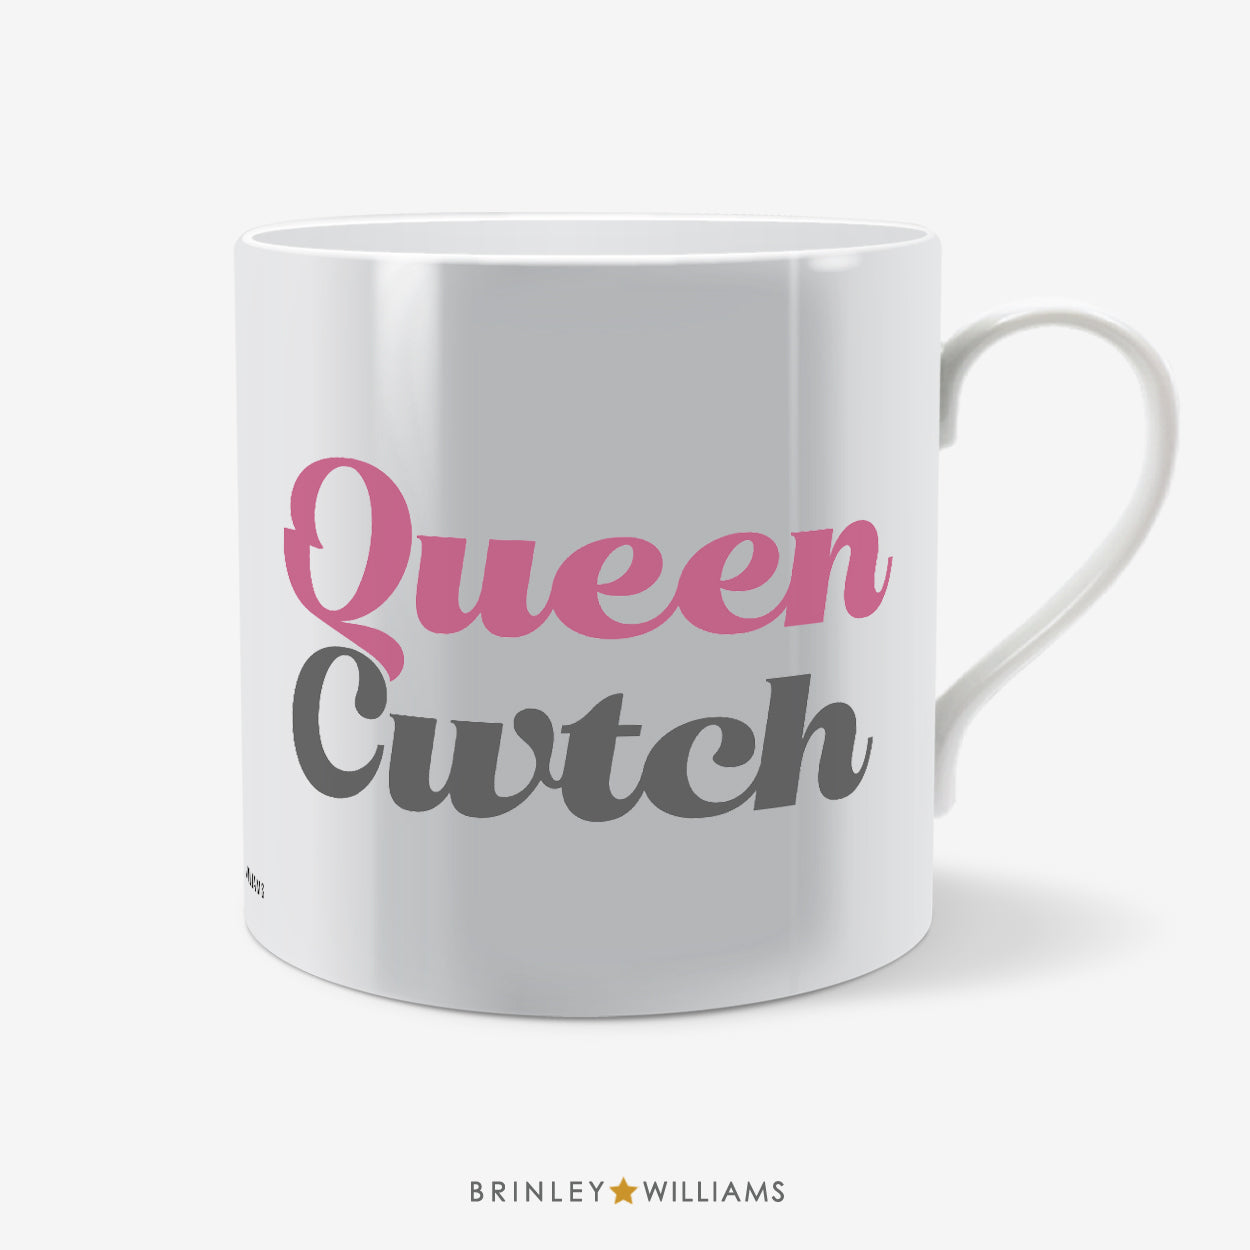 Queen Cwtch Welsh Mug - Pink